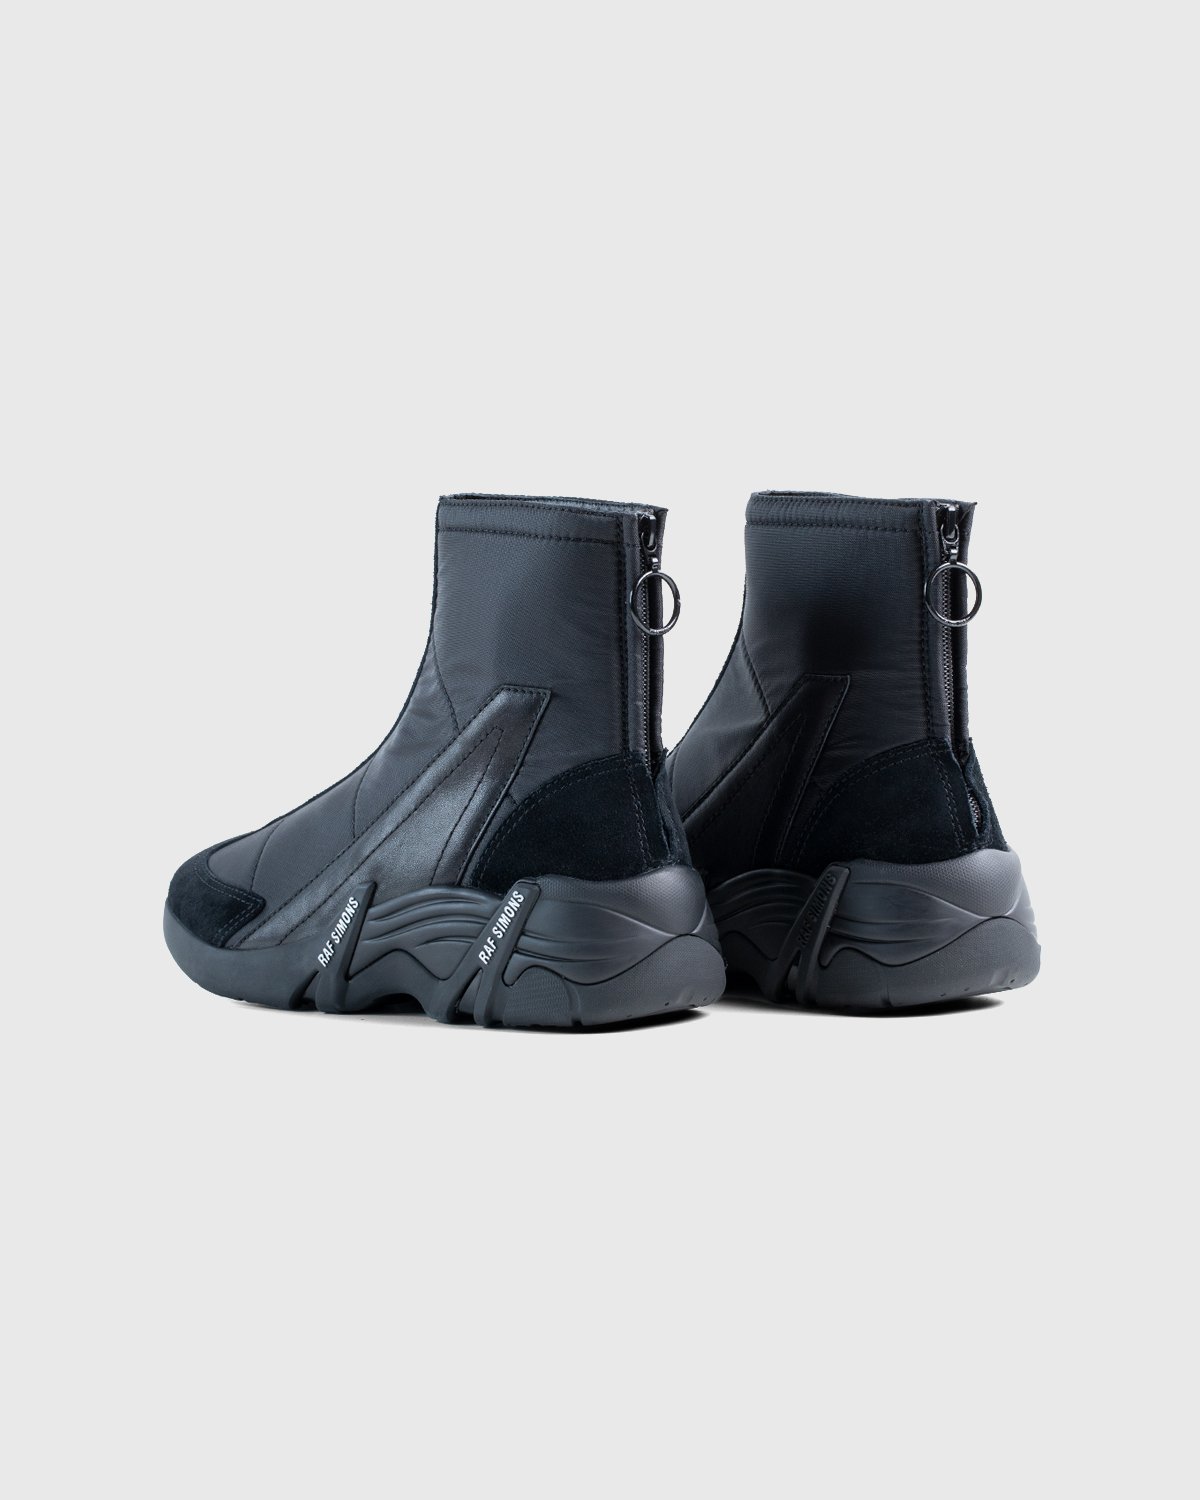 Raf Simons - Cylon 22 Black - Footwear - Black - Image 3